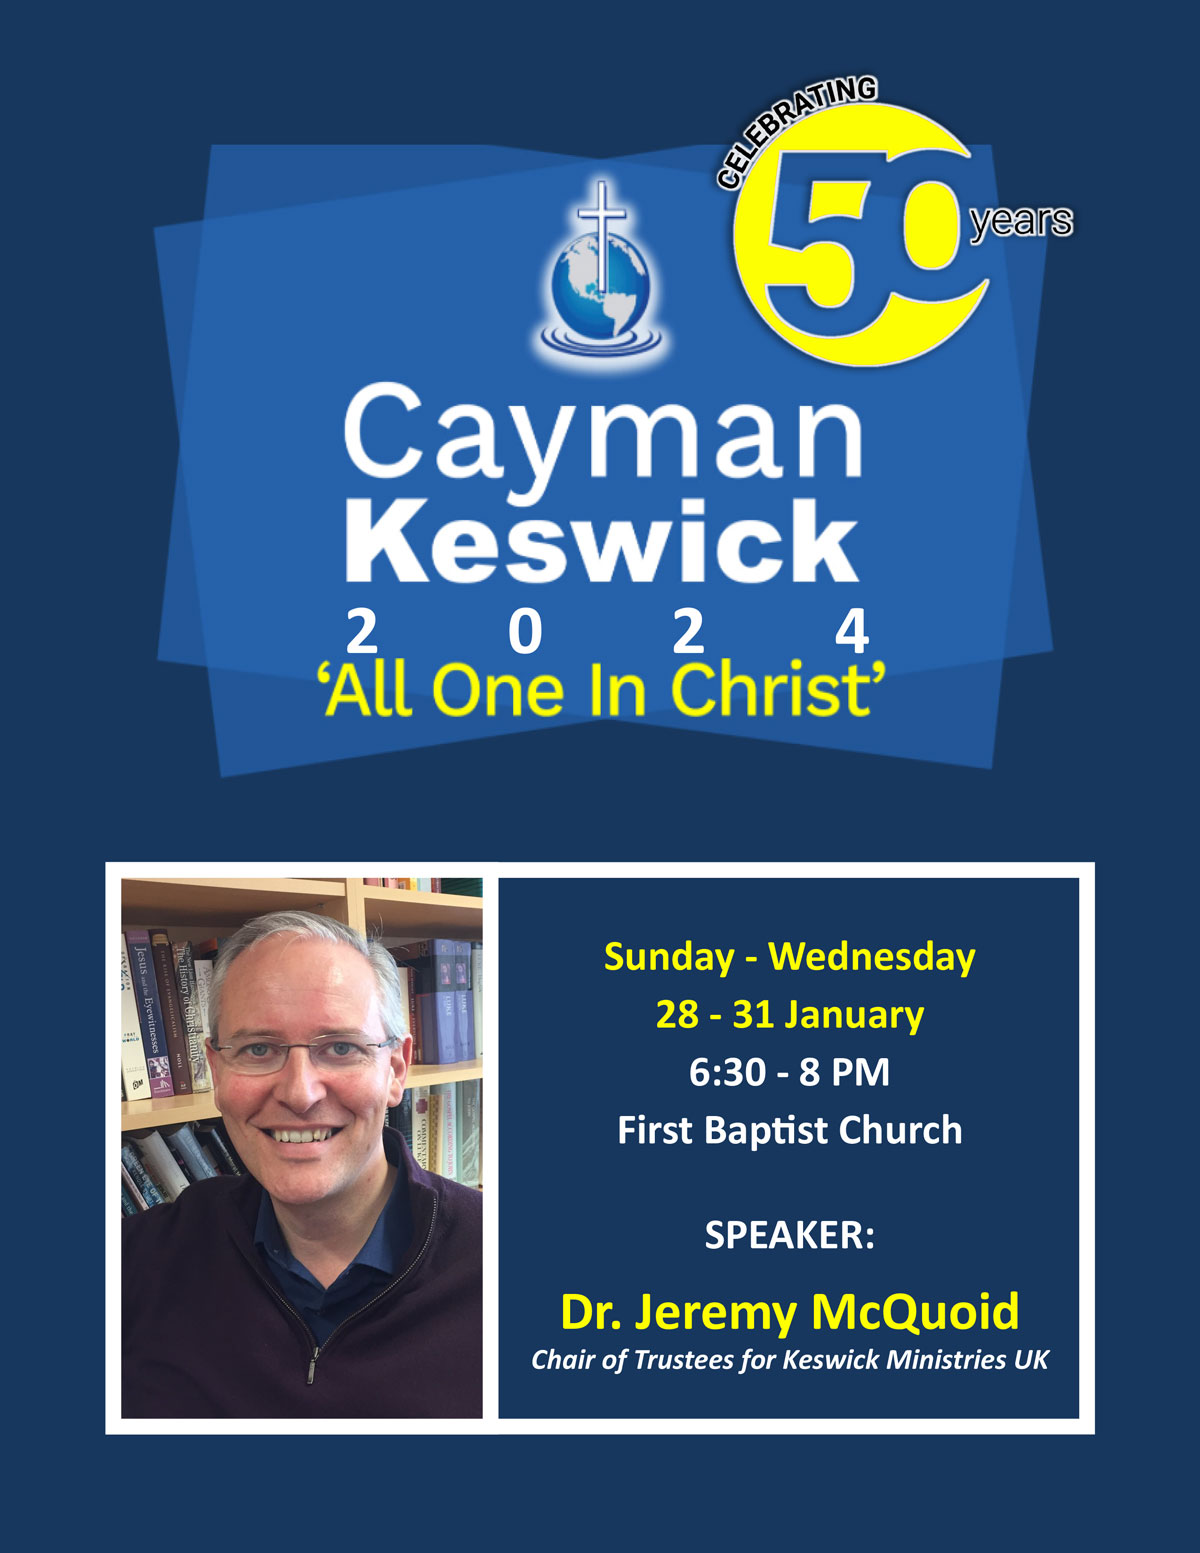 Cayman Keswick event